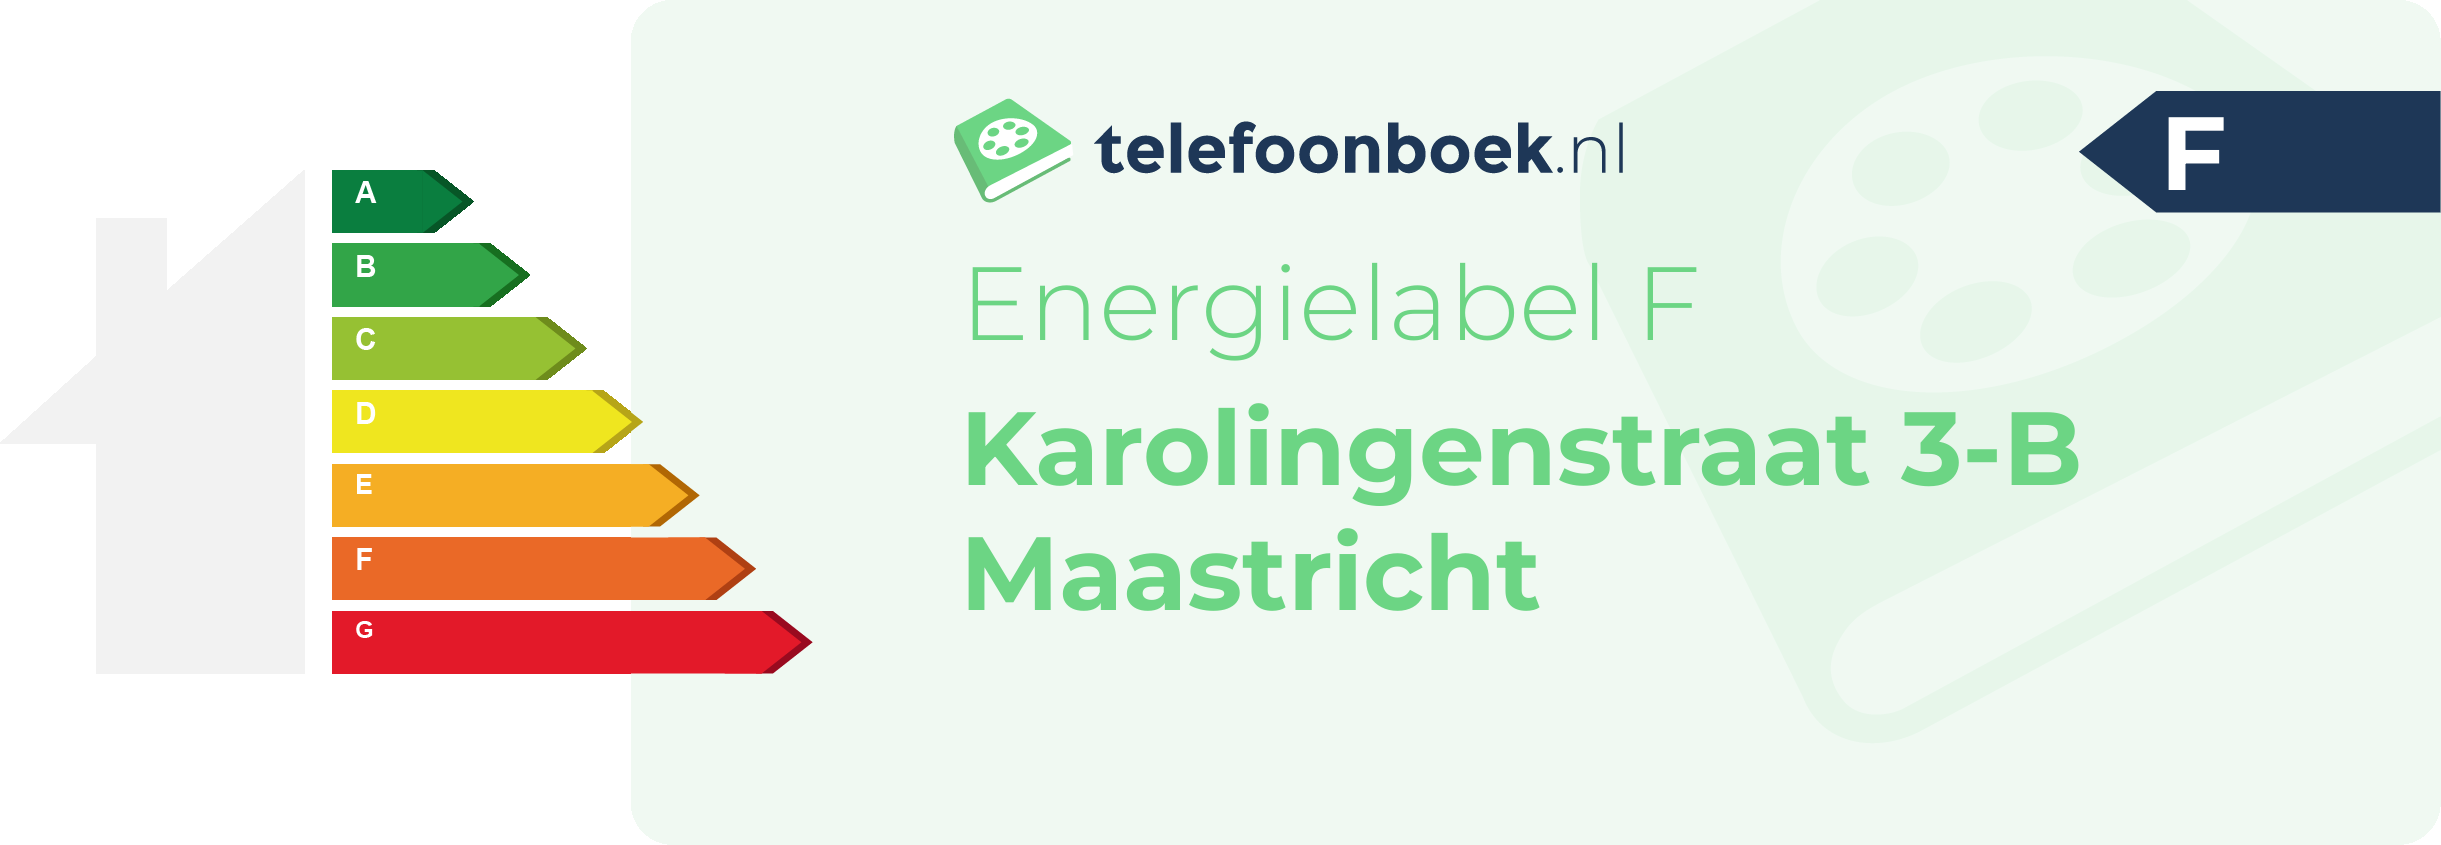 Energielabel Karolingenstraat 3-B Maastricht